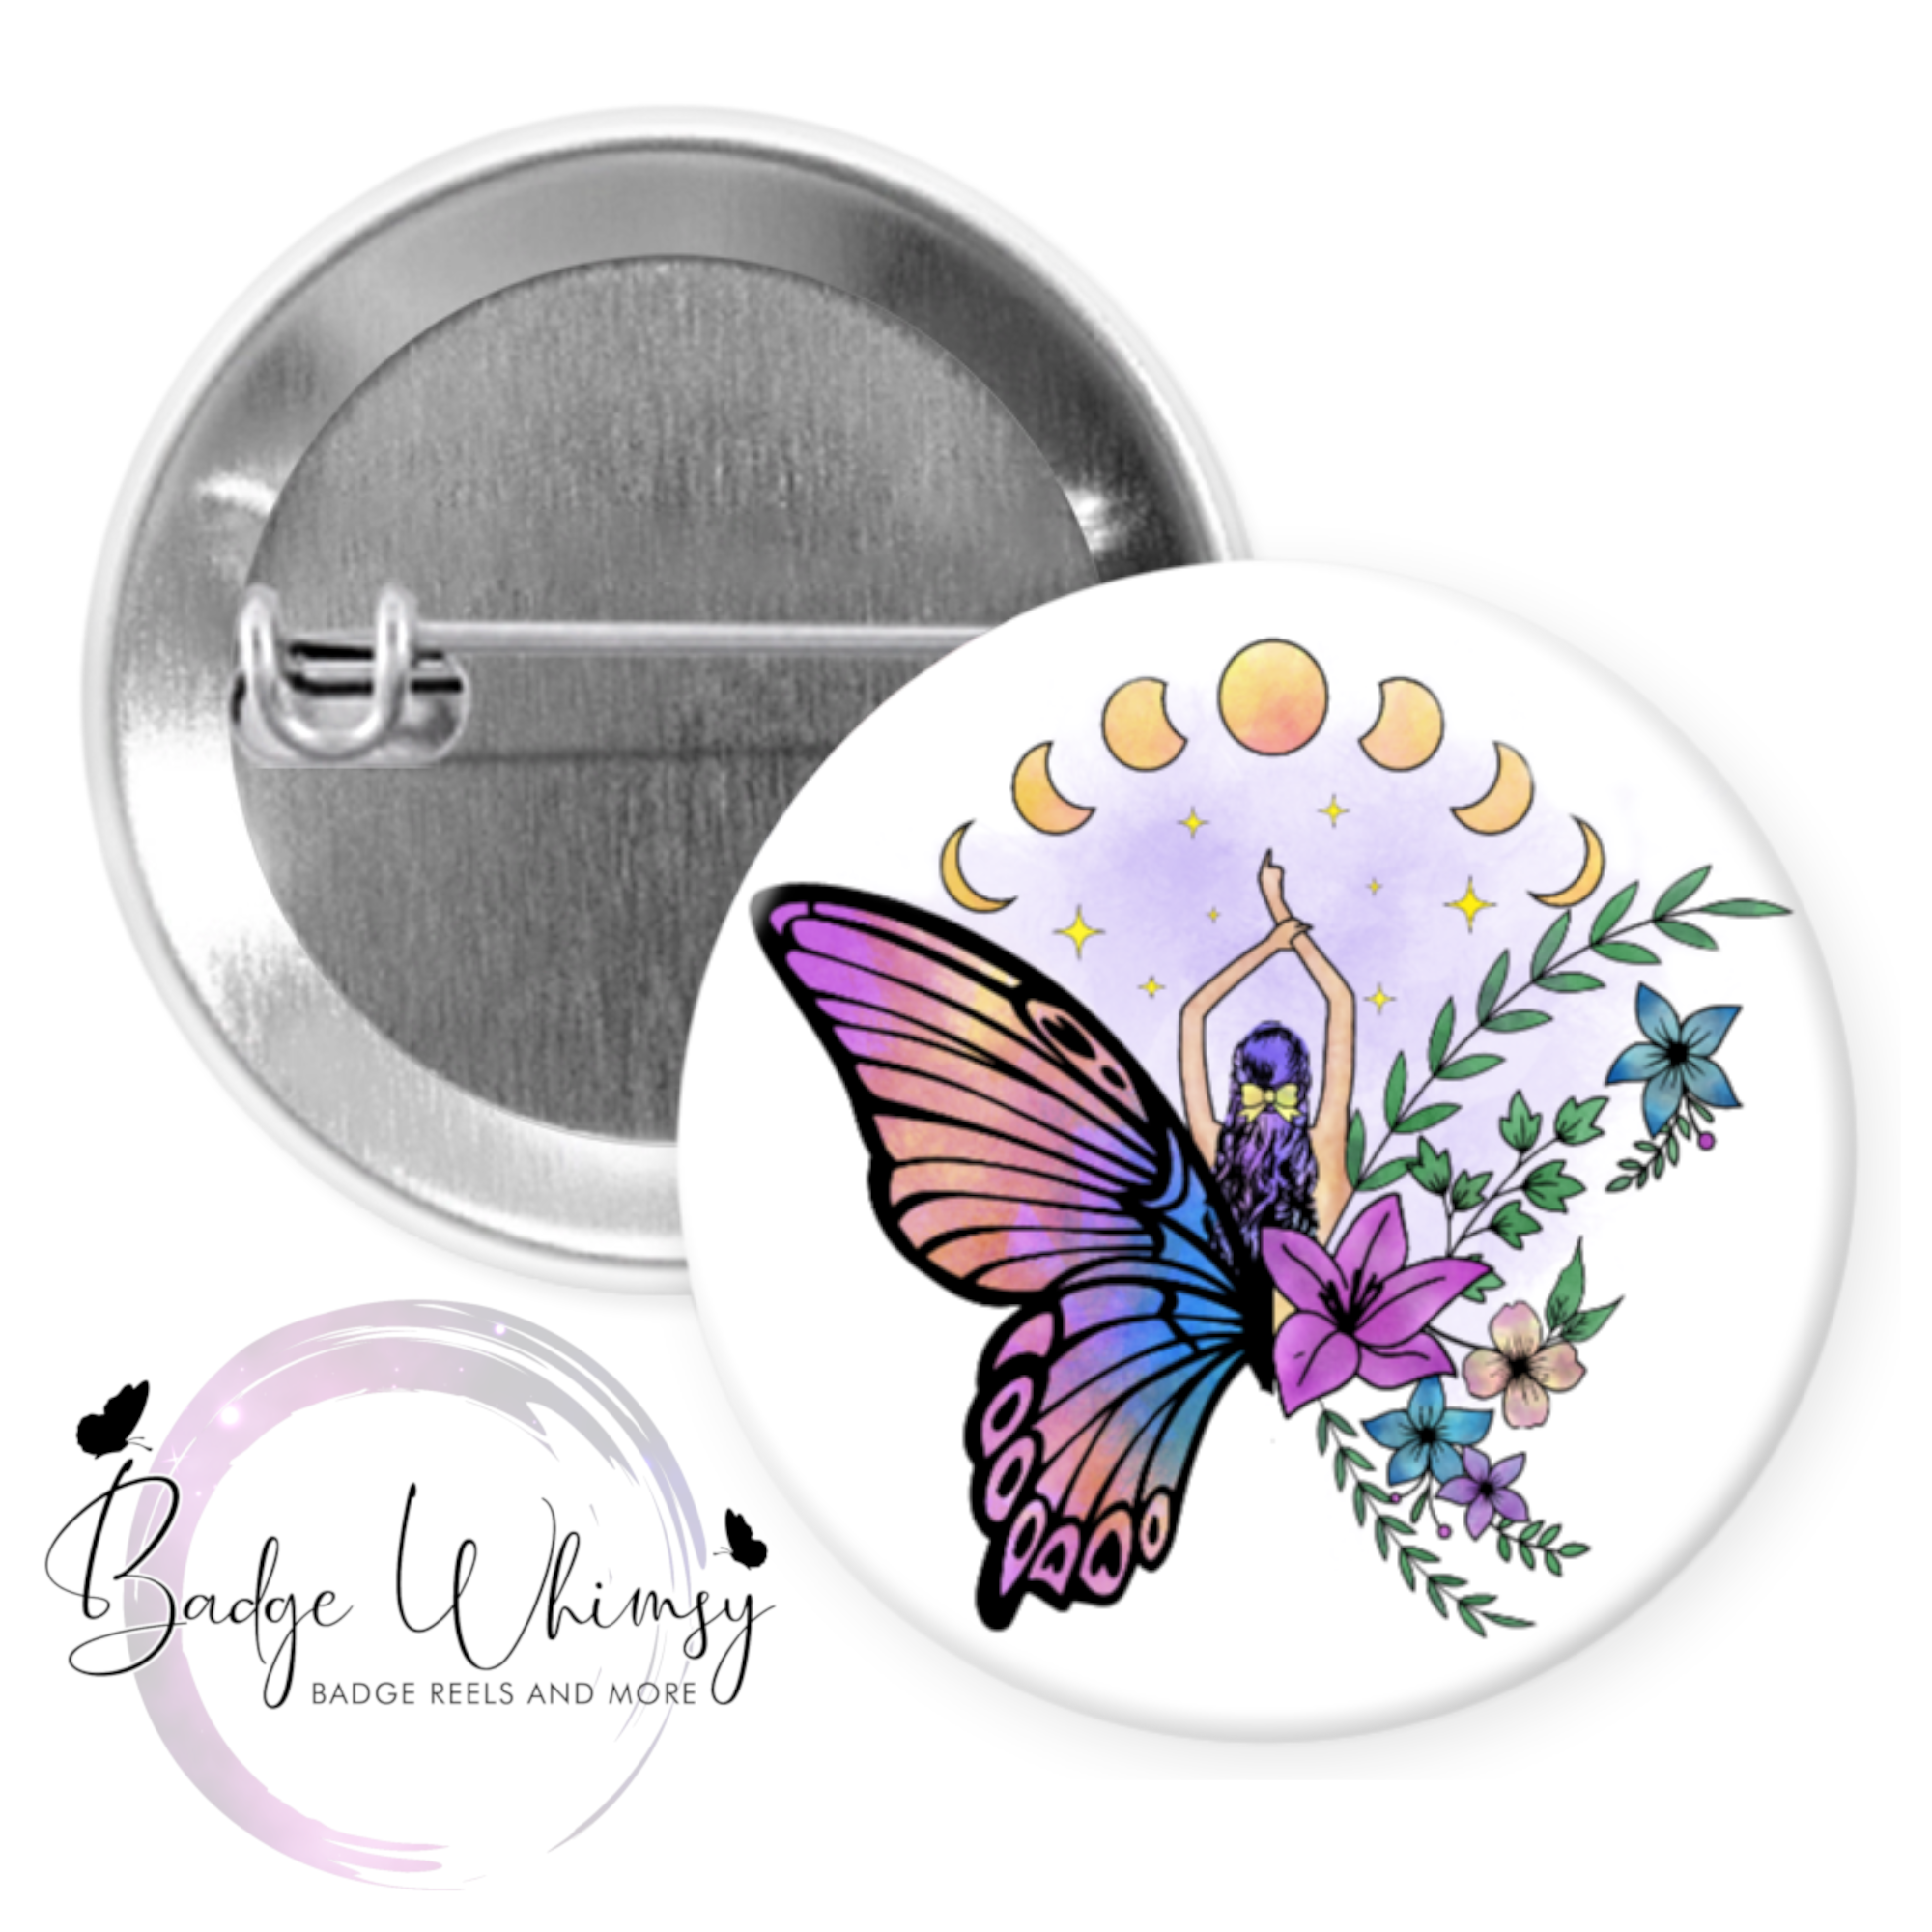 Butterfly Moon Goddess - Pin, Magnet or Badge Holder